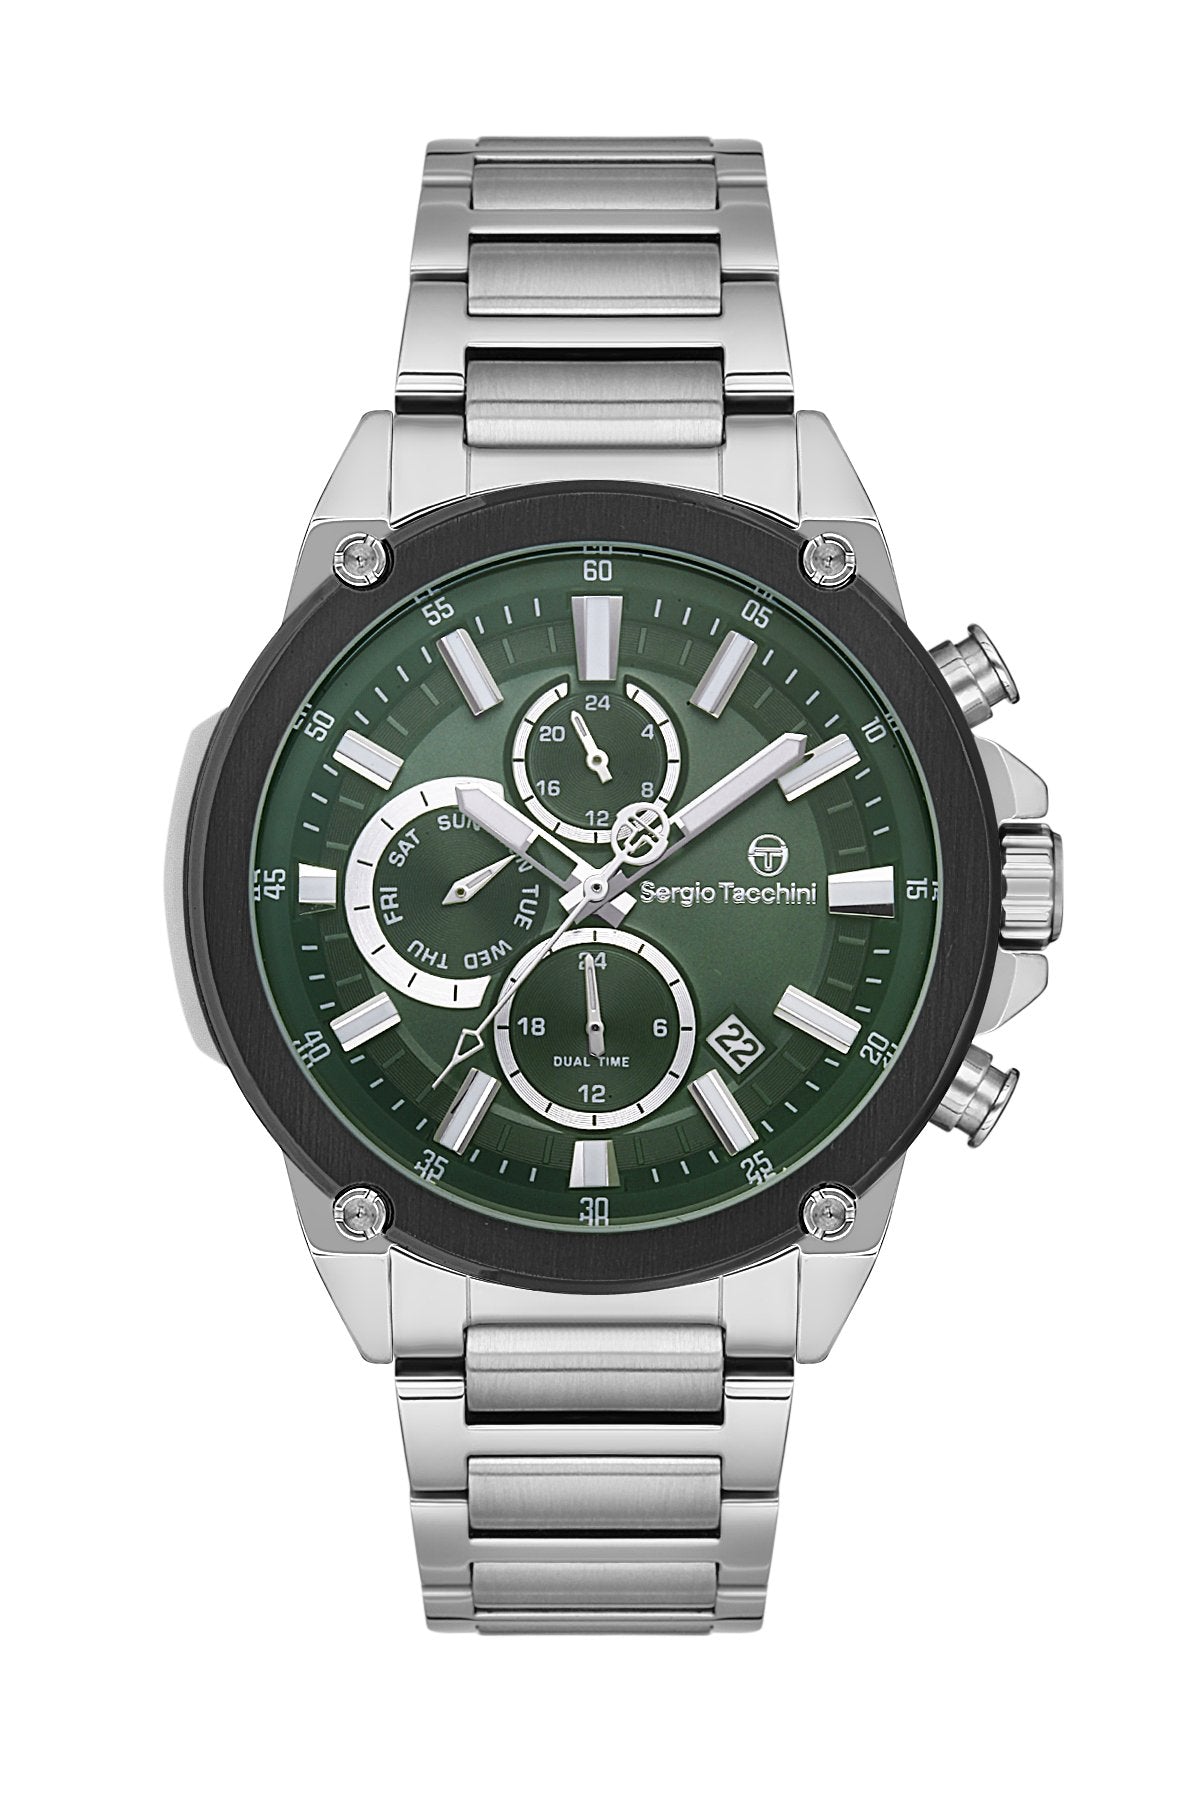 | Sergio Tacchini Men's Watch ST.1.10349-4 - Takreem Craft| - #sho| Sergio Tacchini Men's Watch ST.1.10349-4 - Takreem Craft|p_name#| Sergio Tacchini Men's Watch ST.1.10349-4 - Takreem Craft|WatchSergio TacchiniTakreem.joST.1.10349-48682308122688SilverStainless SteelMen| Sergio Tacchini Men's Watch ST.1.10349-4 - Takreem Craft|